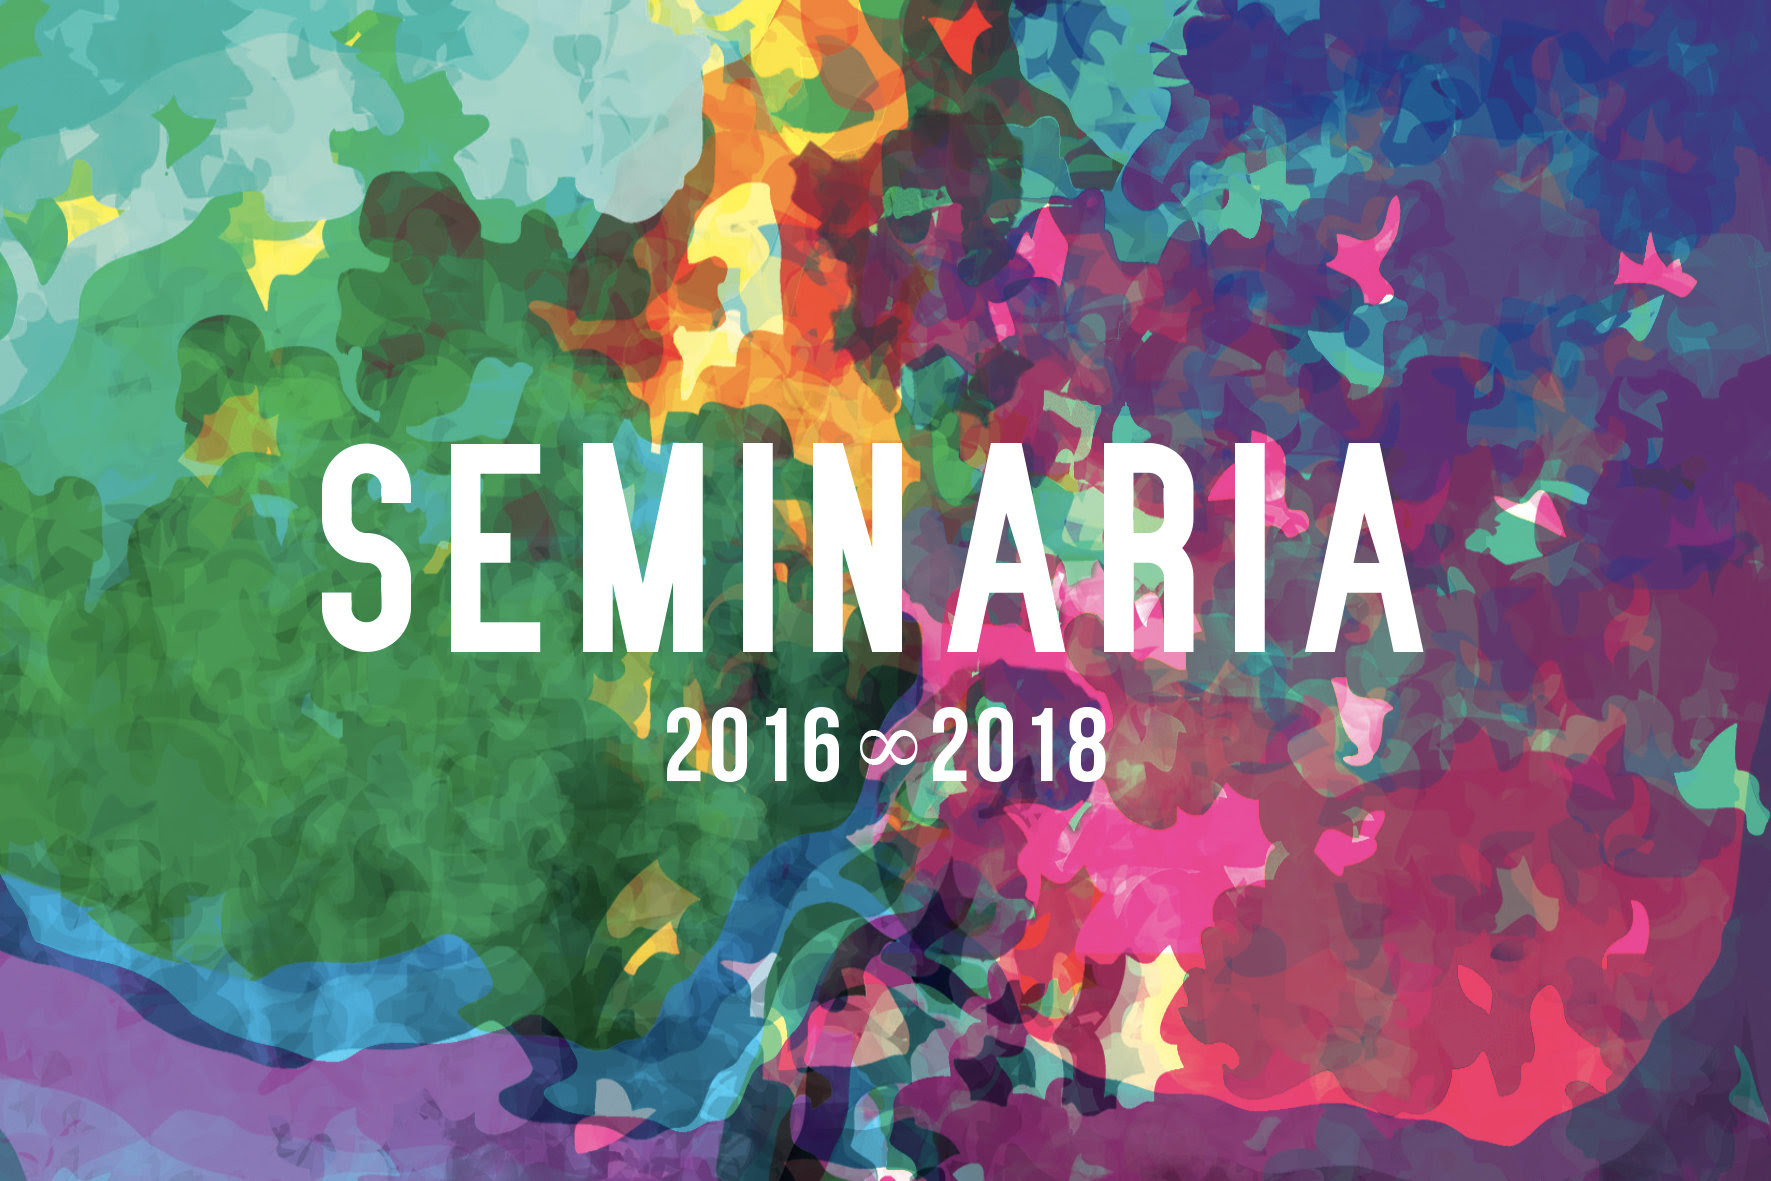 seminaria-sogninterra-presenta-seminaria-2016-2018-ponza-racconta